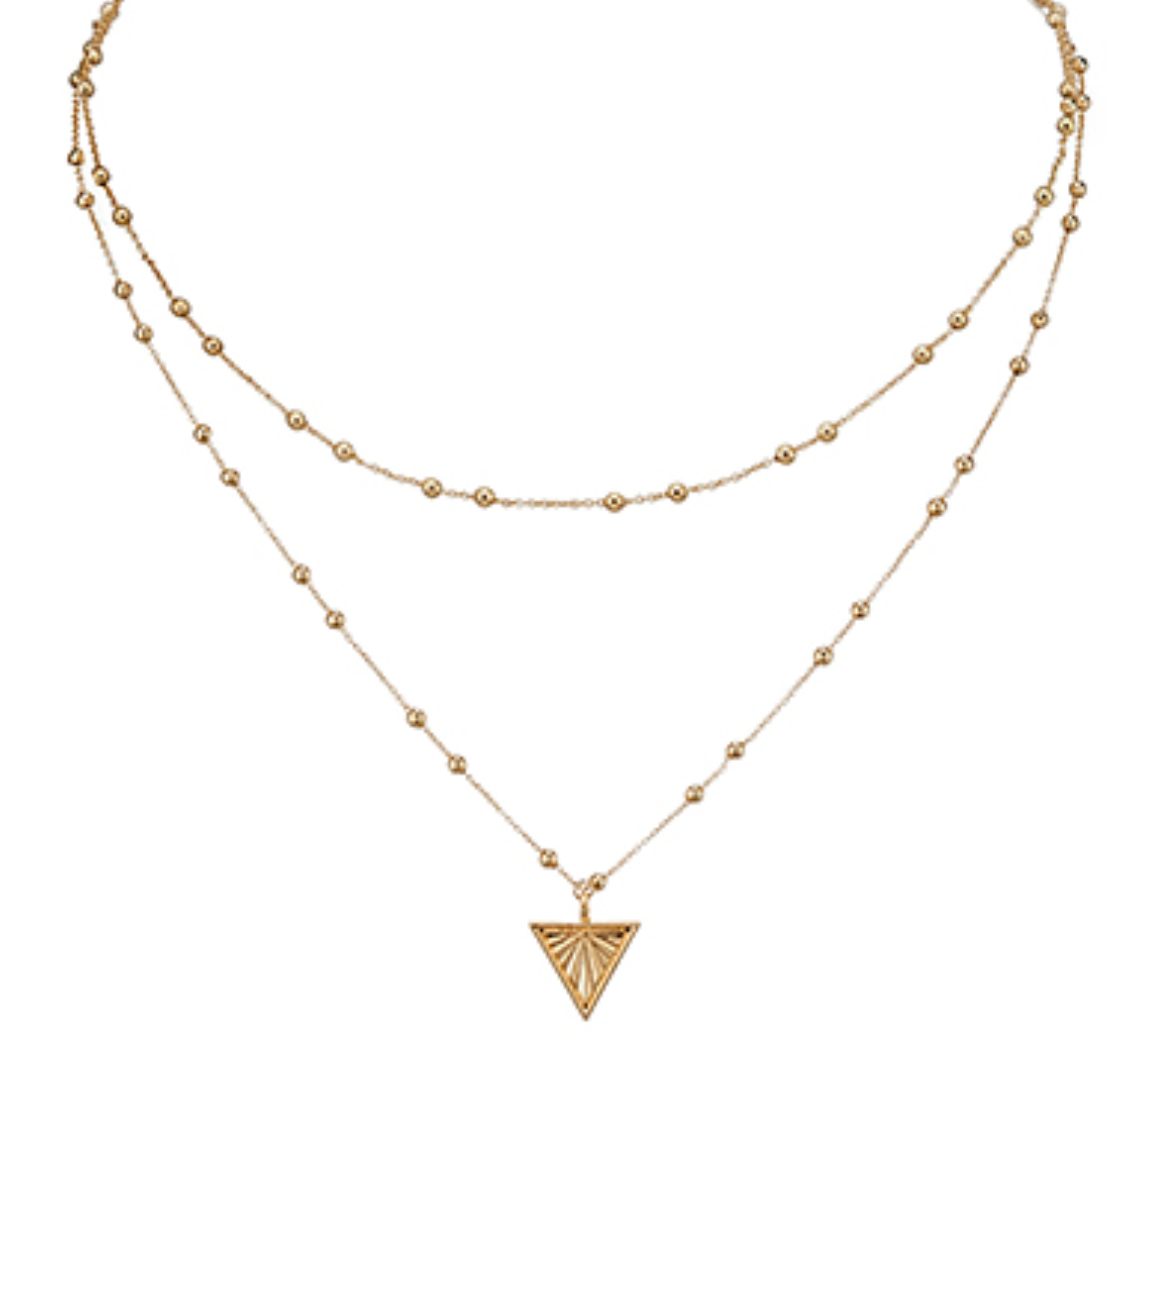 Gold Layered Arrow Triangle Arrow Pendant Necklace